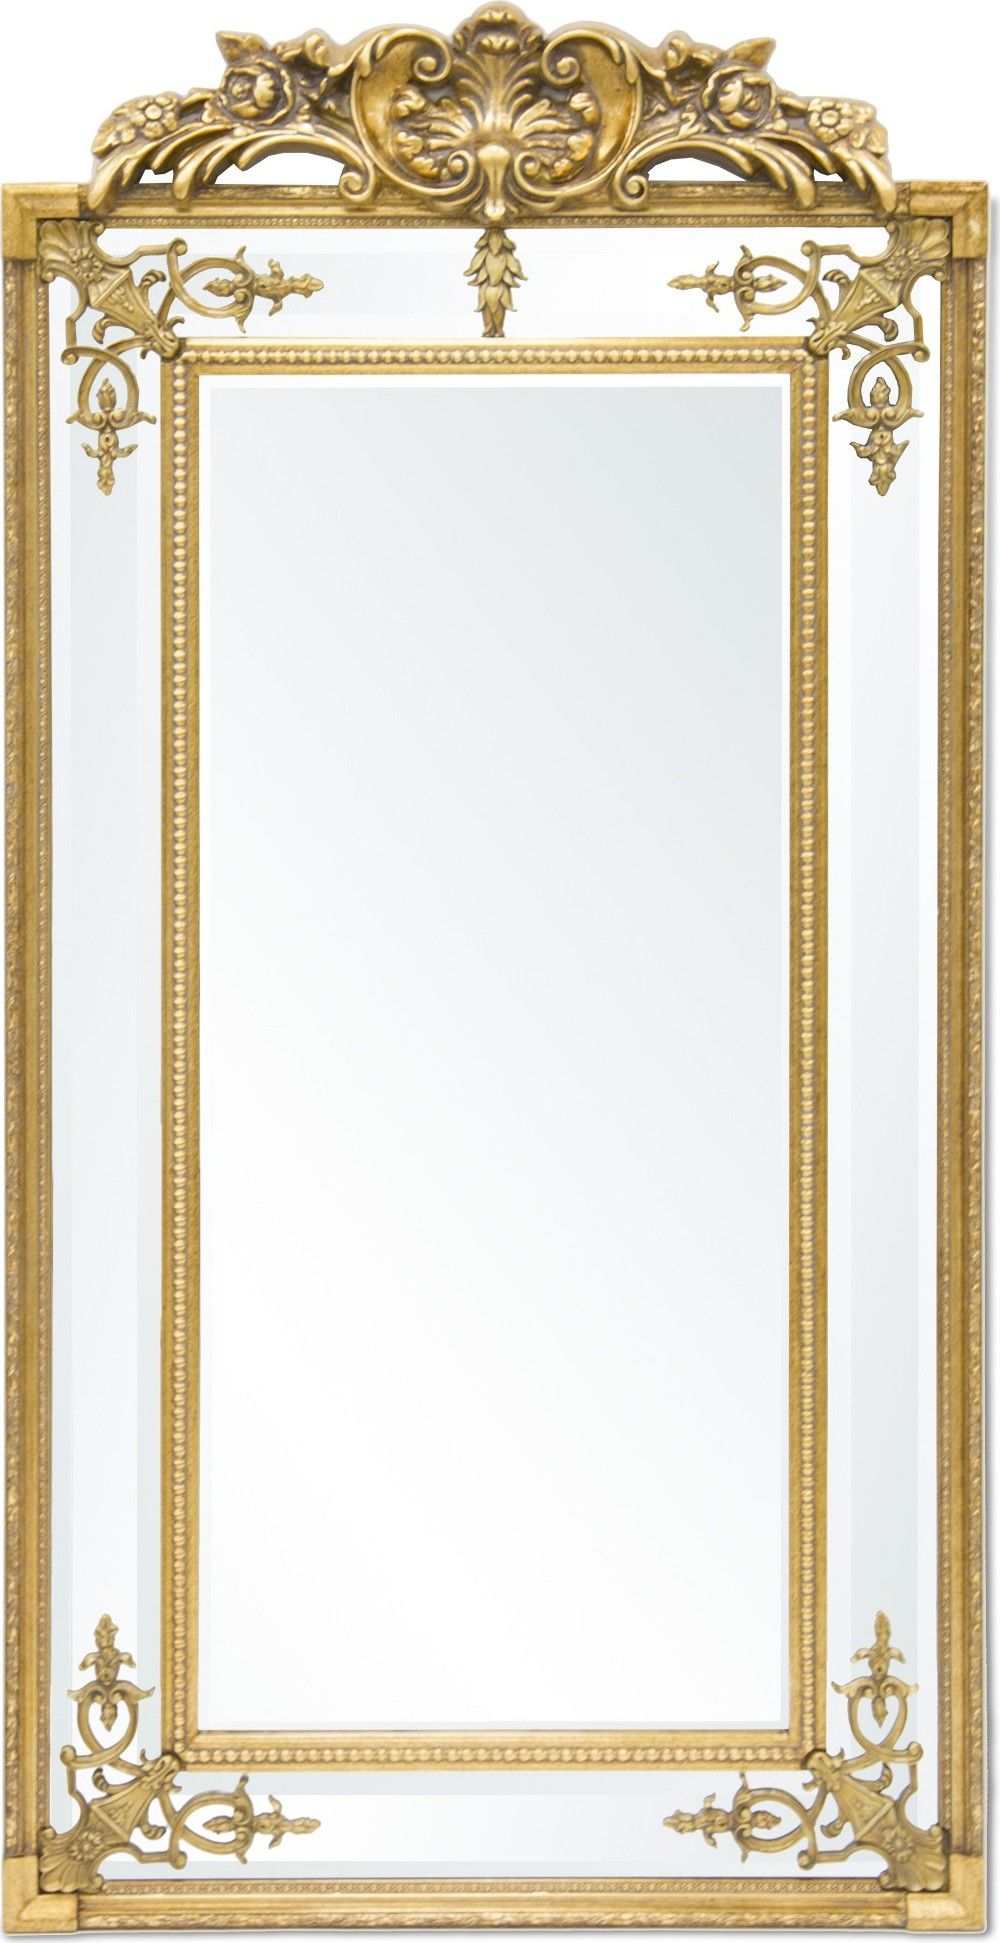 Zrcadlo pro královnu 103220 Mdum - M DUM.cz